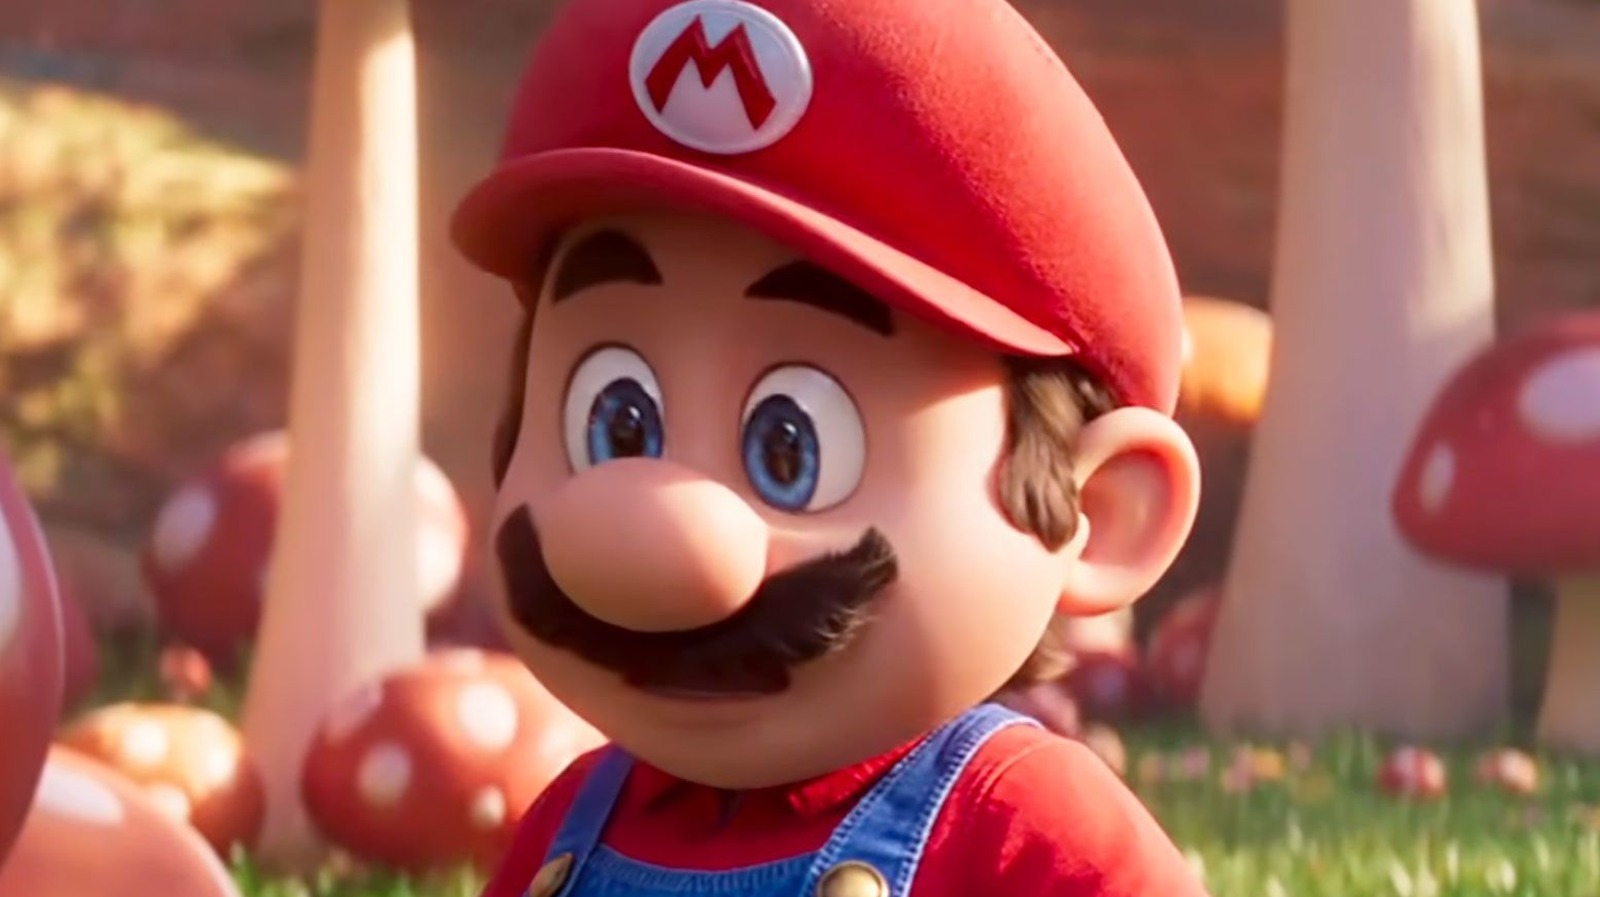 Super Mario Bros. Movie Defies Critics with Massive Opening Day